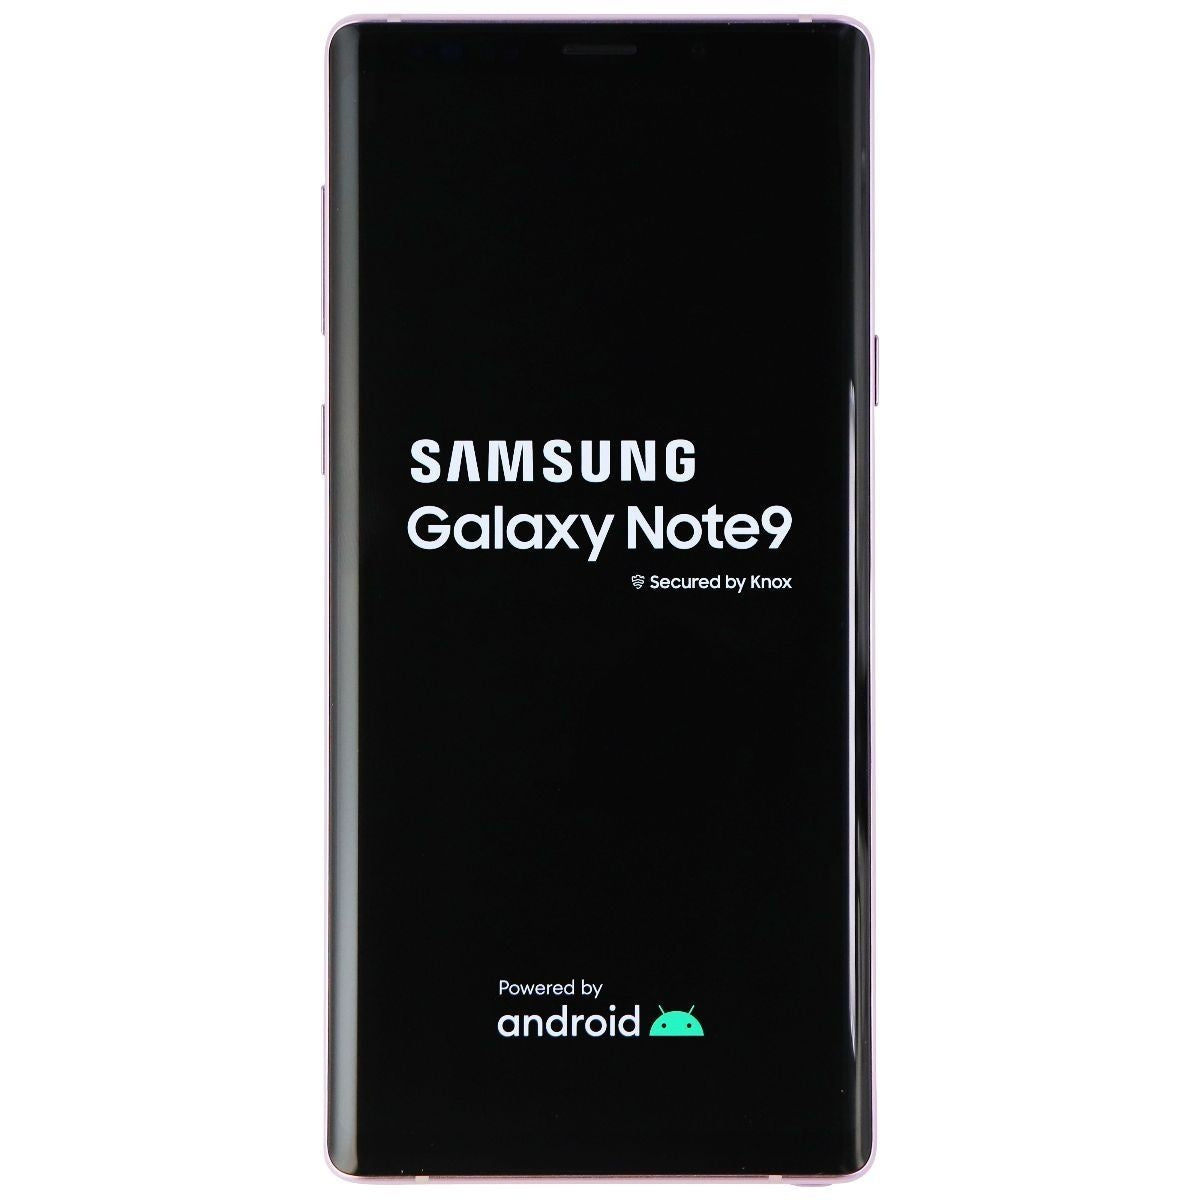 Samsung Galaxy Note9 (6.4-in) (SM-N960U1) UNLOCKED - 128GB / Lavender Purple Cell Phones & Smartphones Samsung    - Simple Cell Bulk Wholesale Pricing - USA Seller